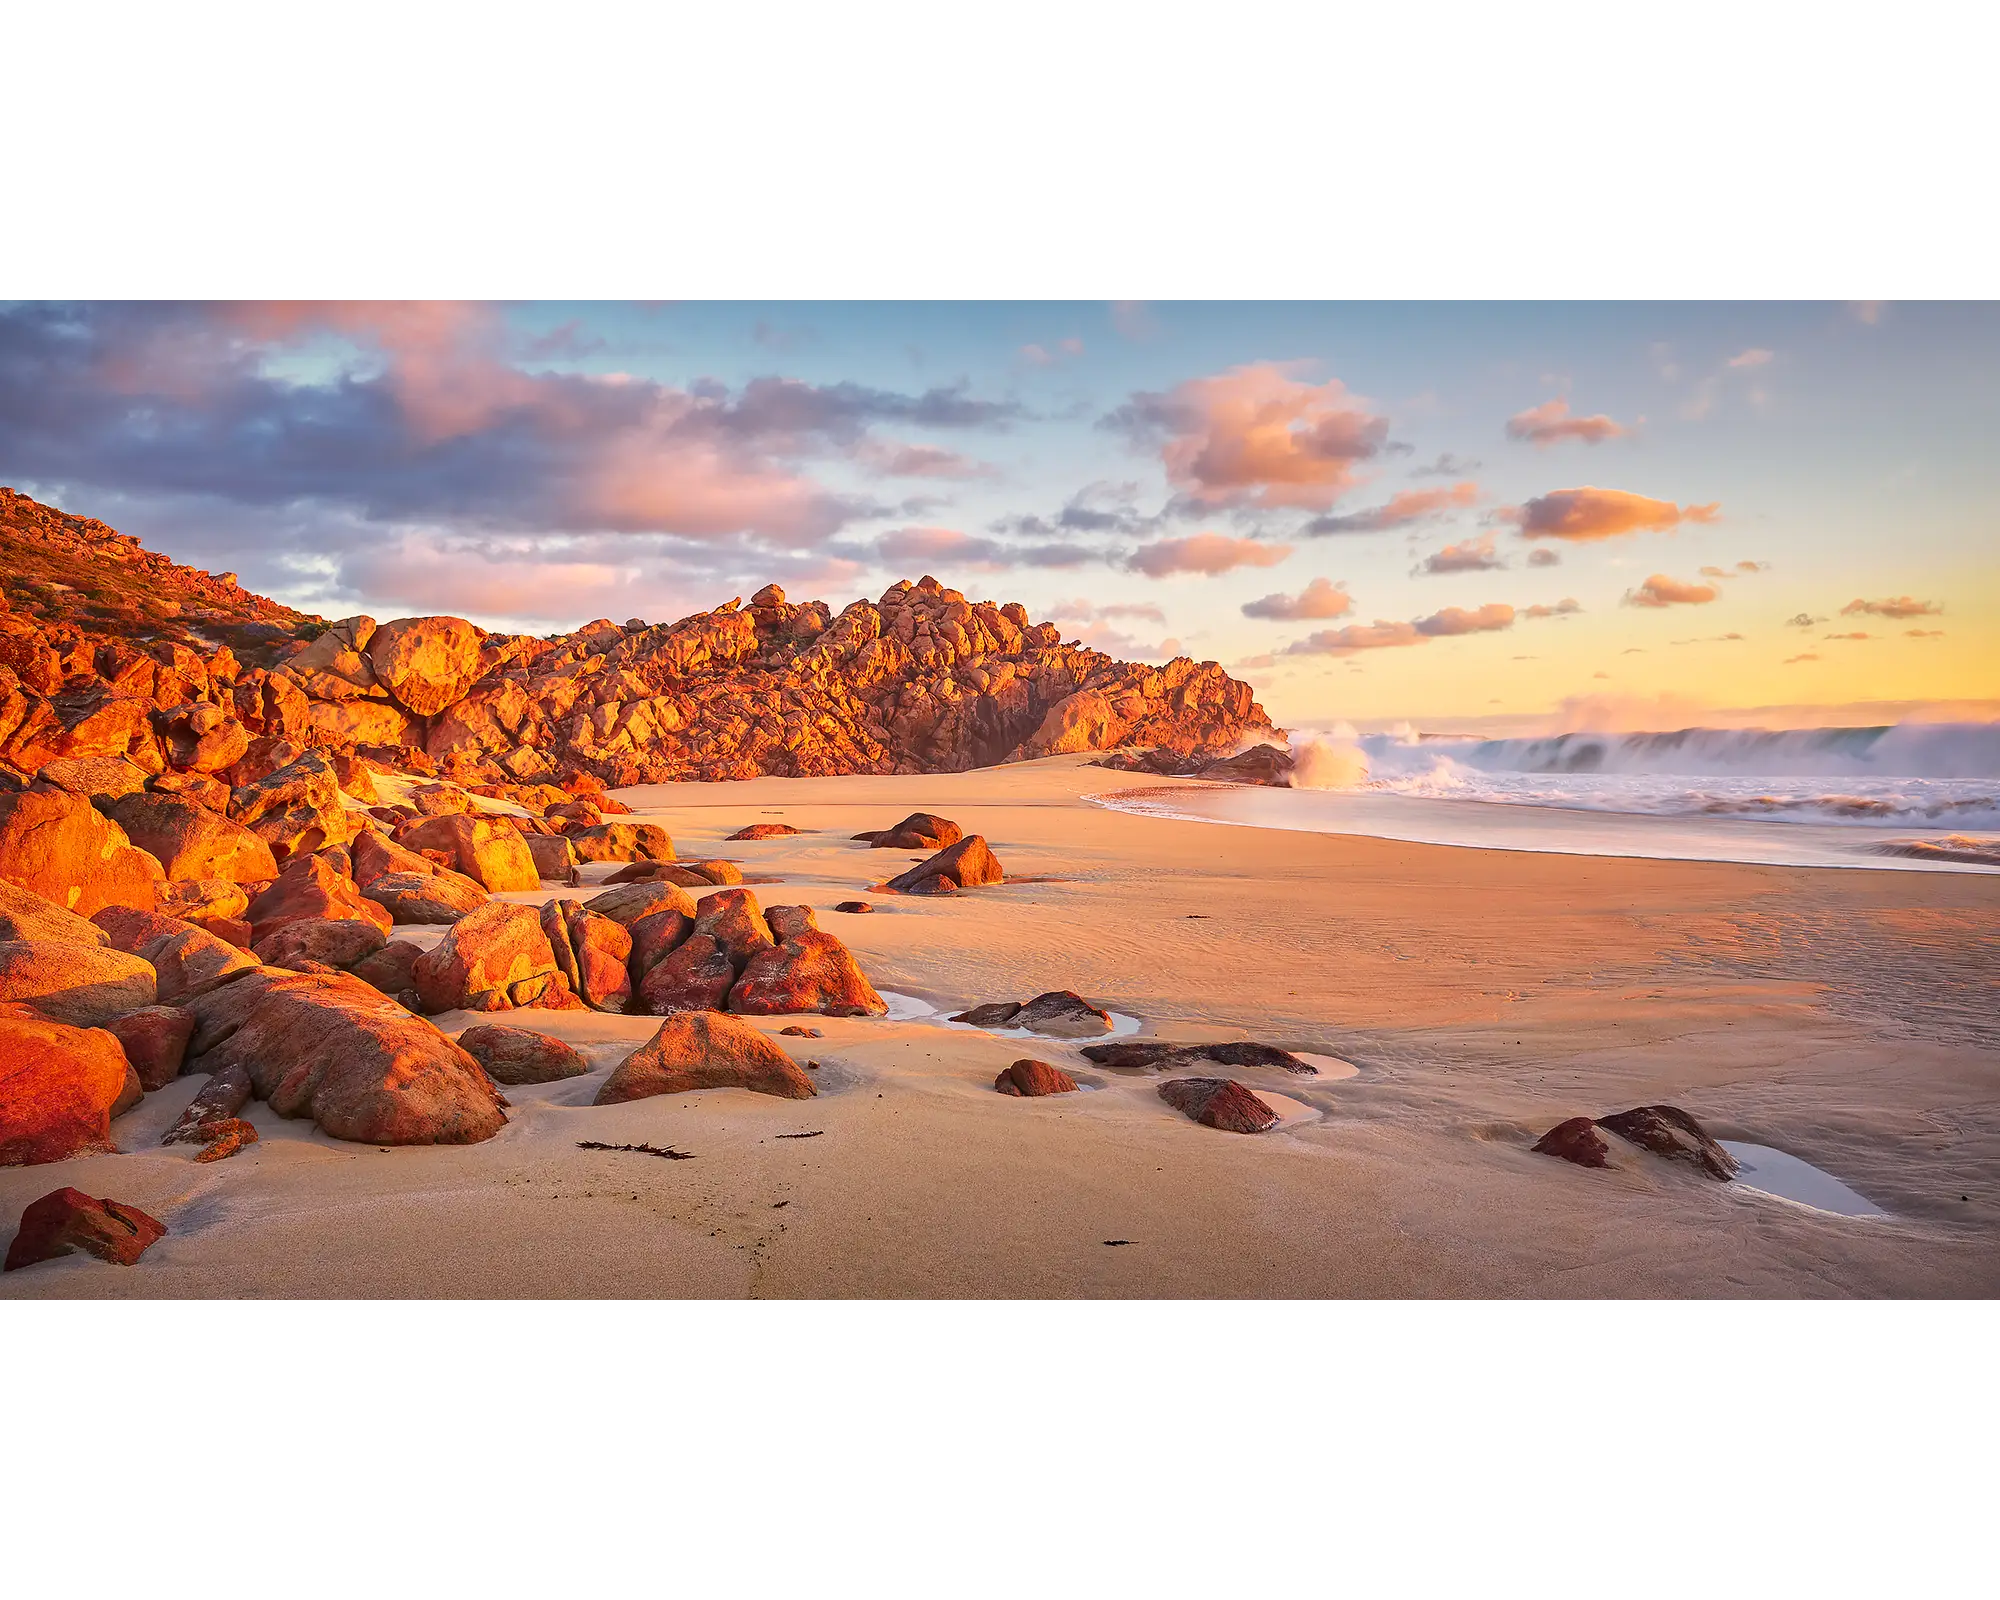 Sunset on Wyadup Beach, Western Australia.